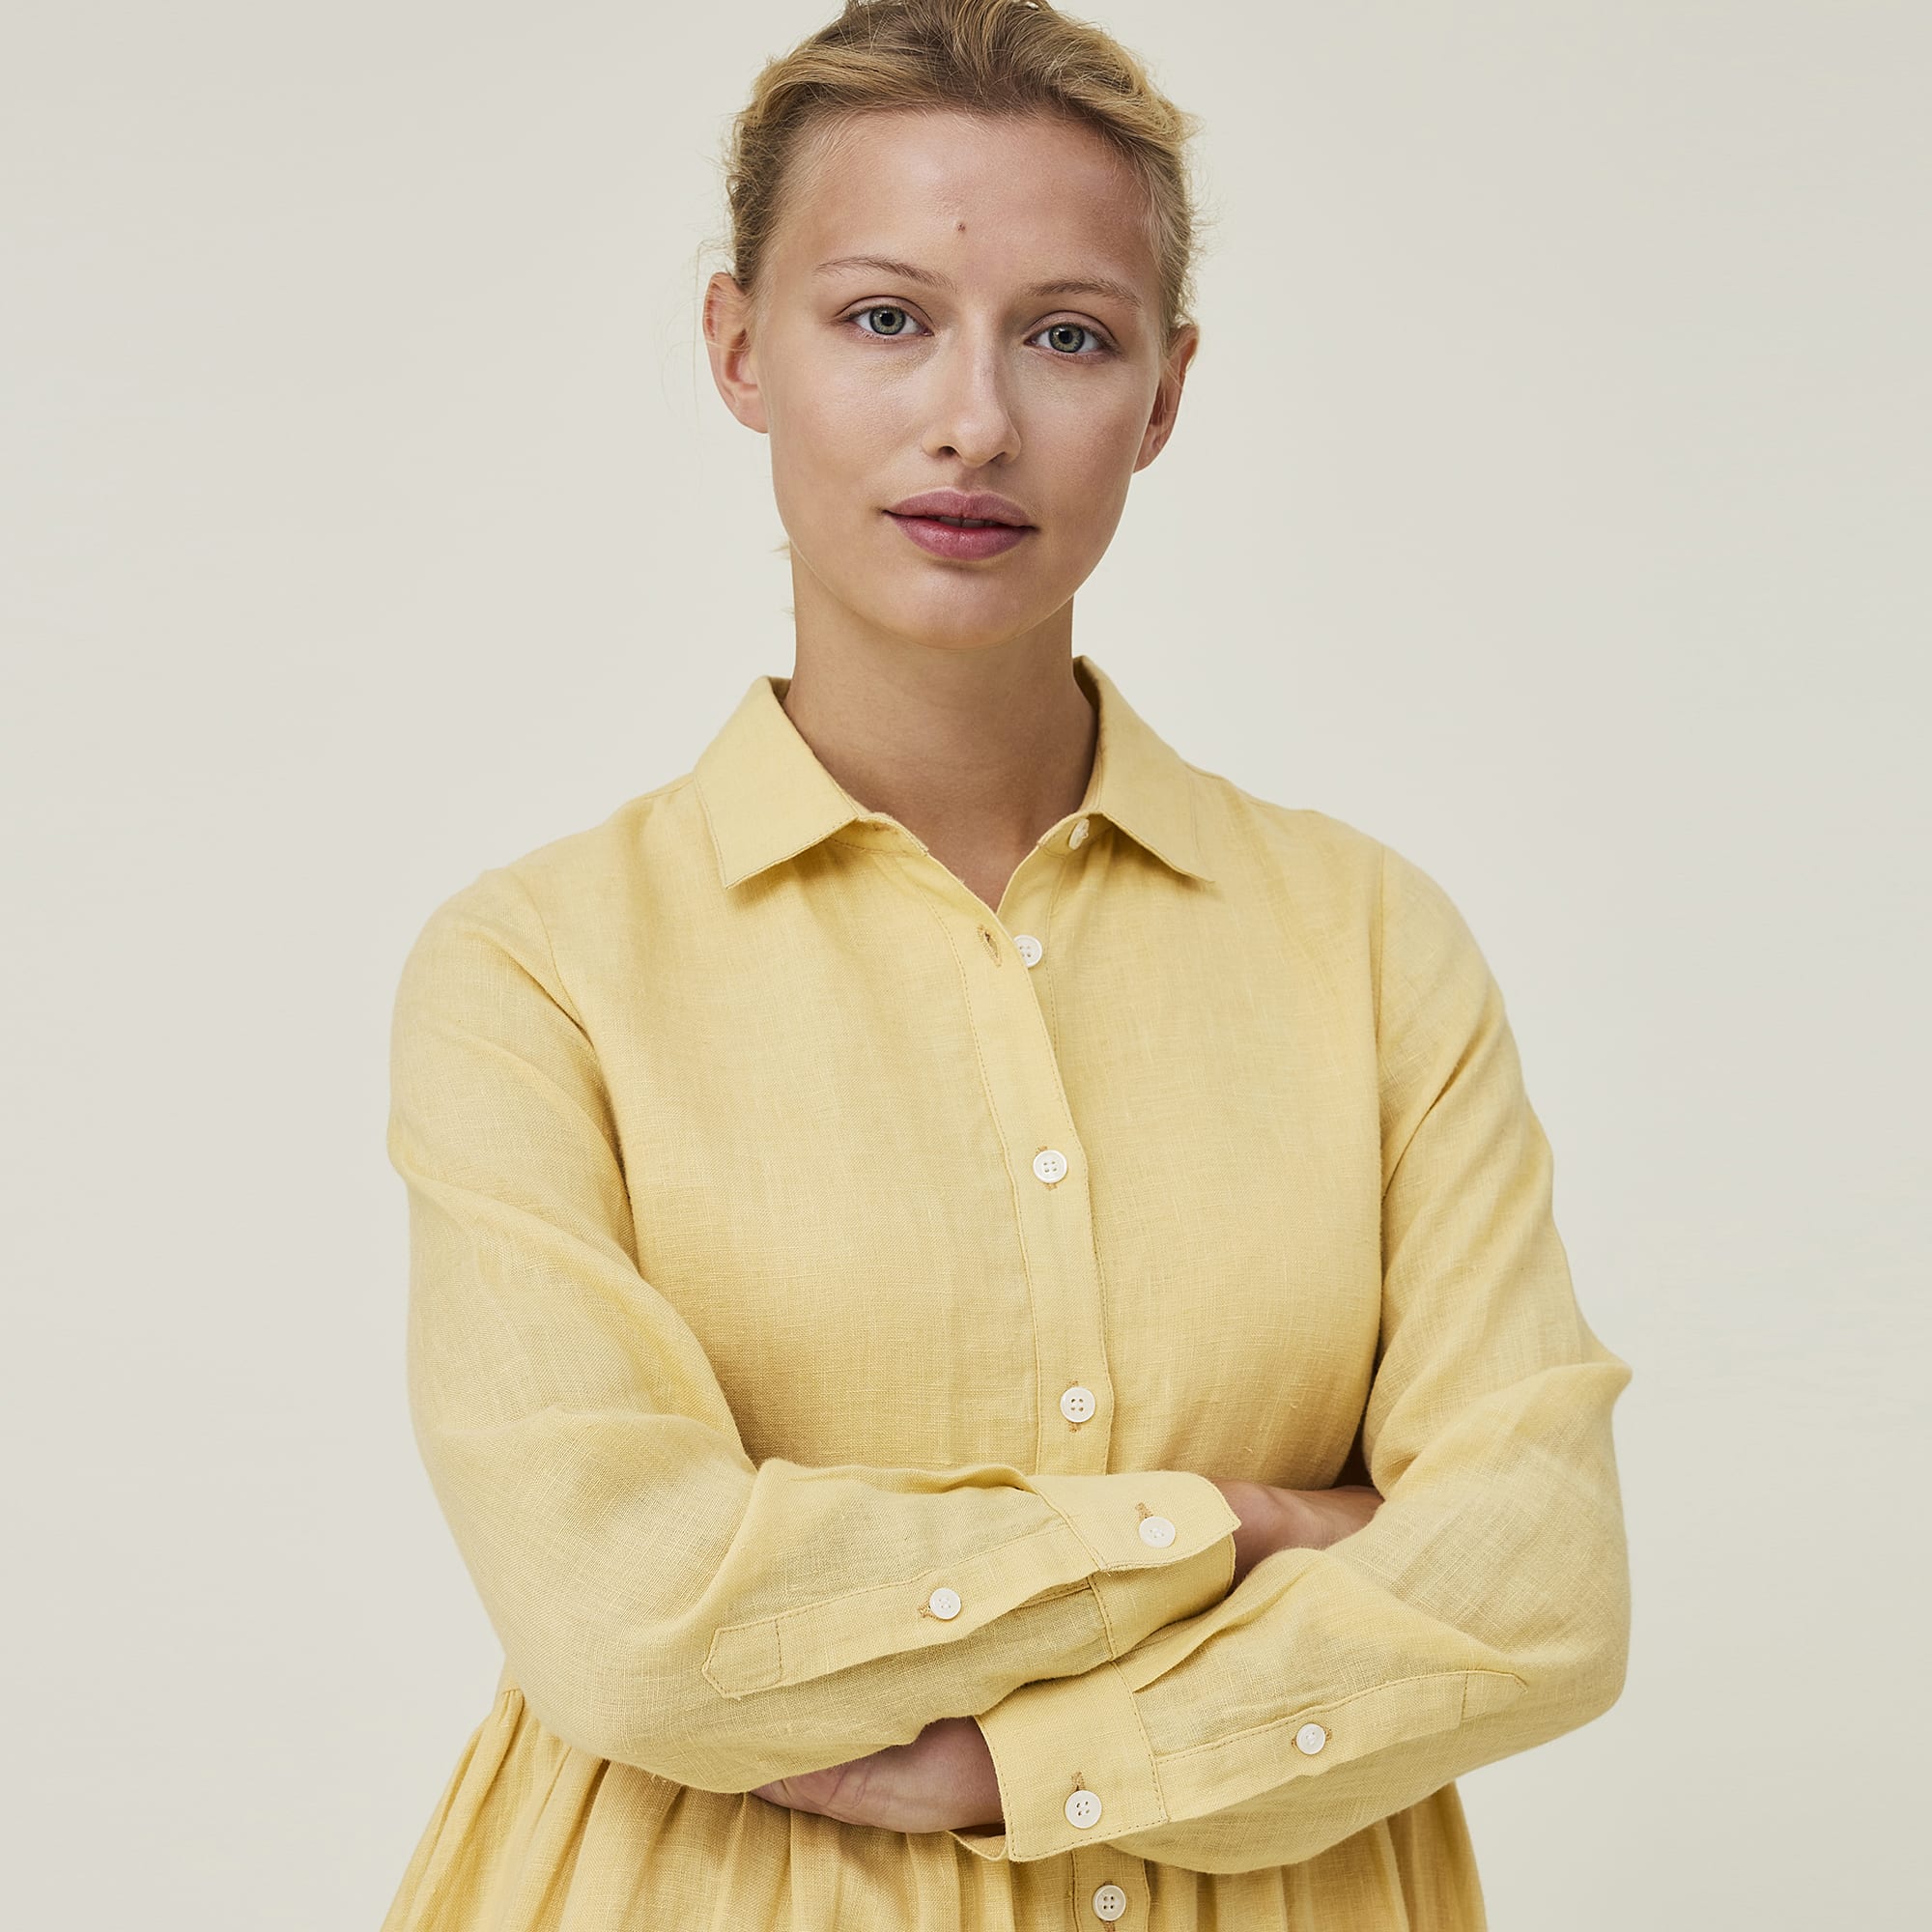 Andrea Linen Dress, yellow